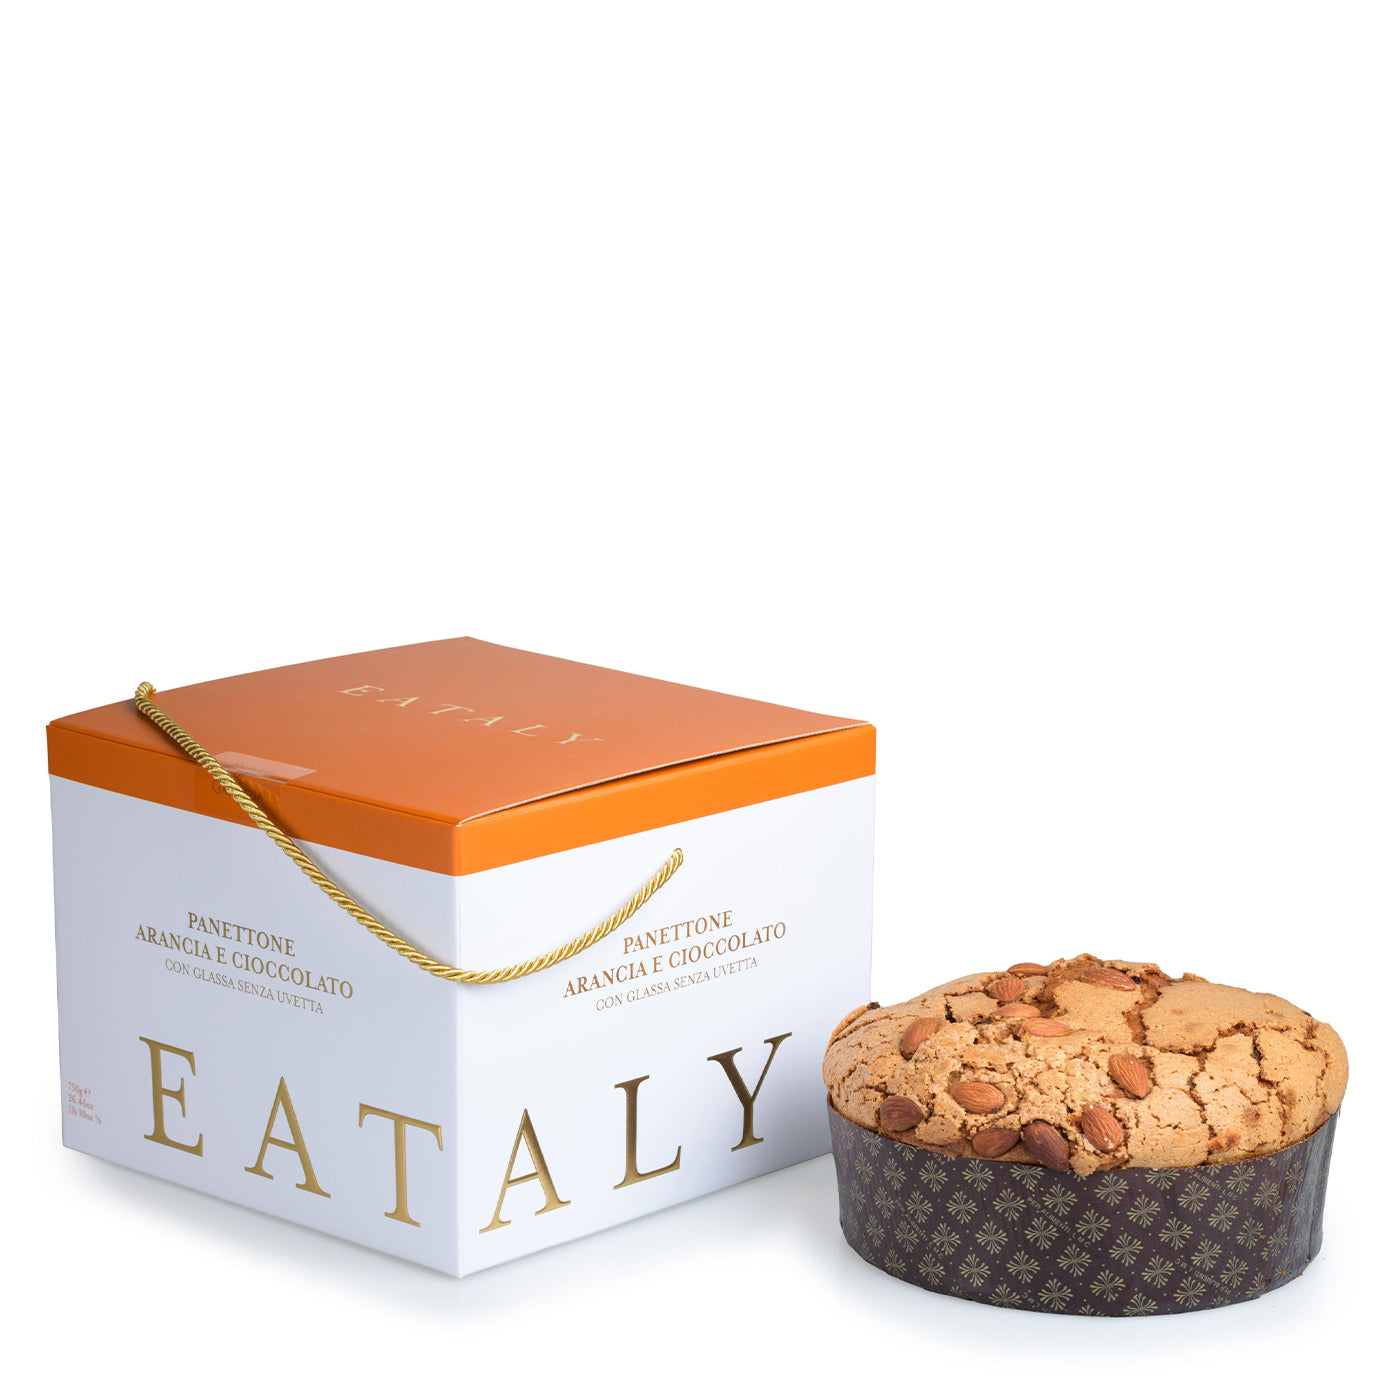 Panettone grand chocolat 1kg – Eataly